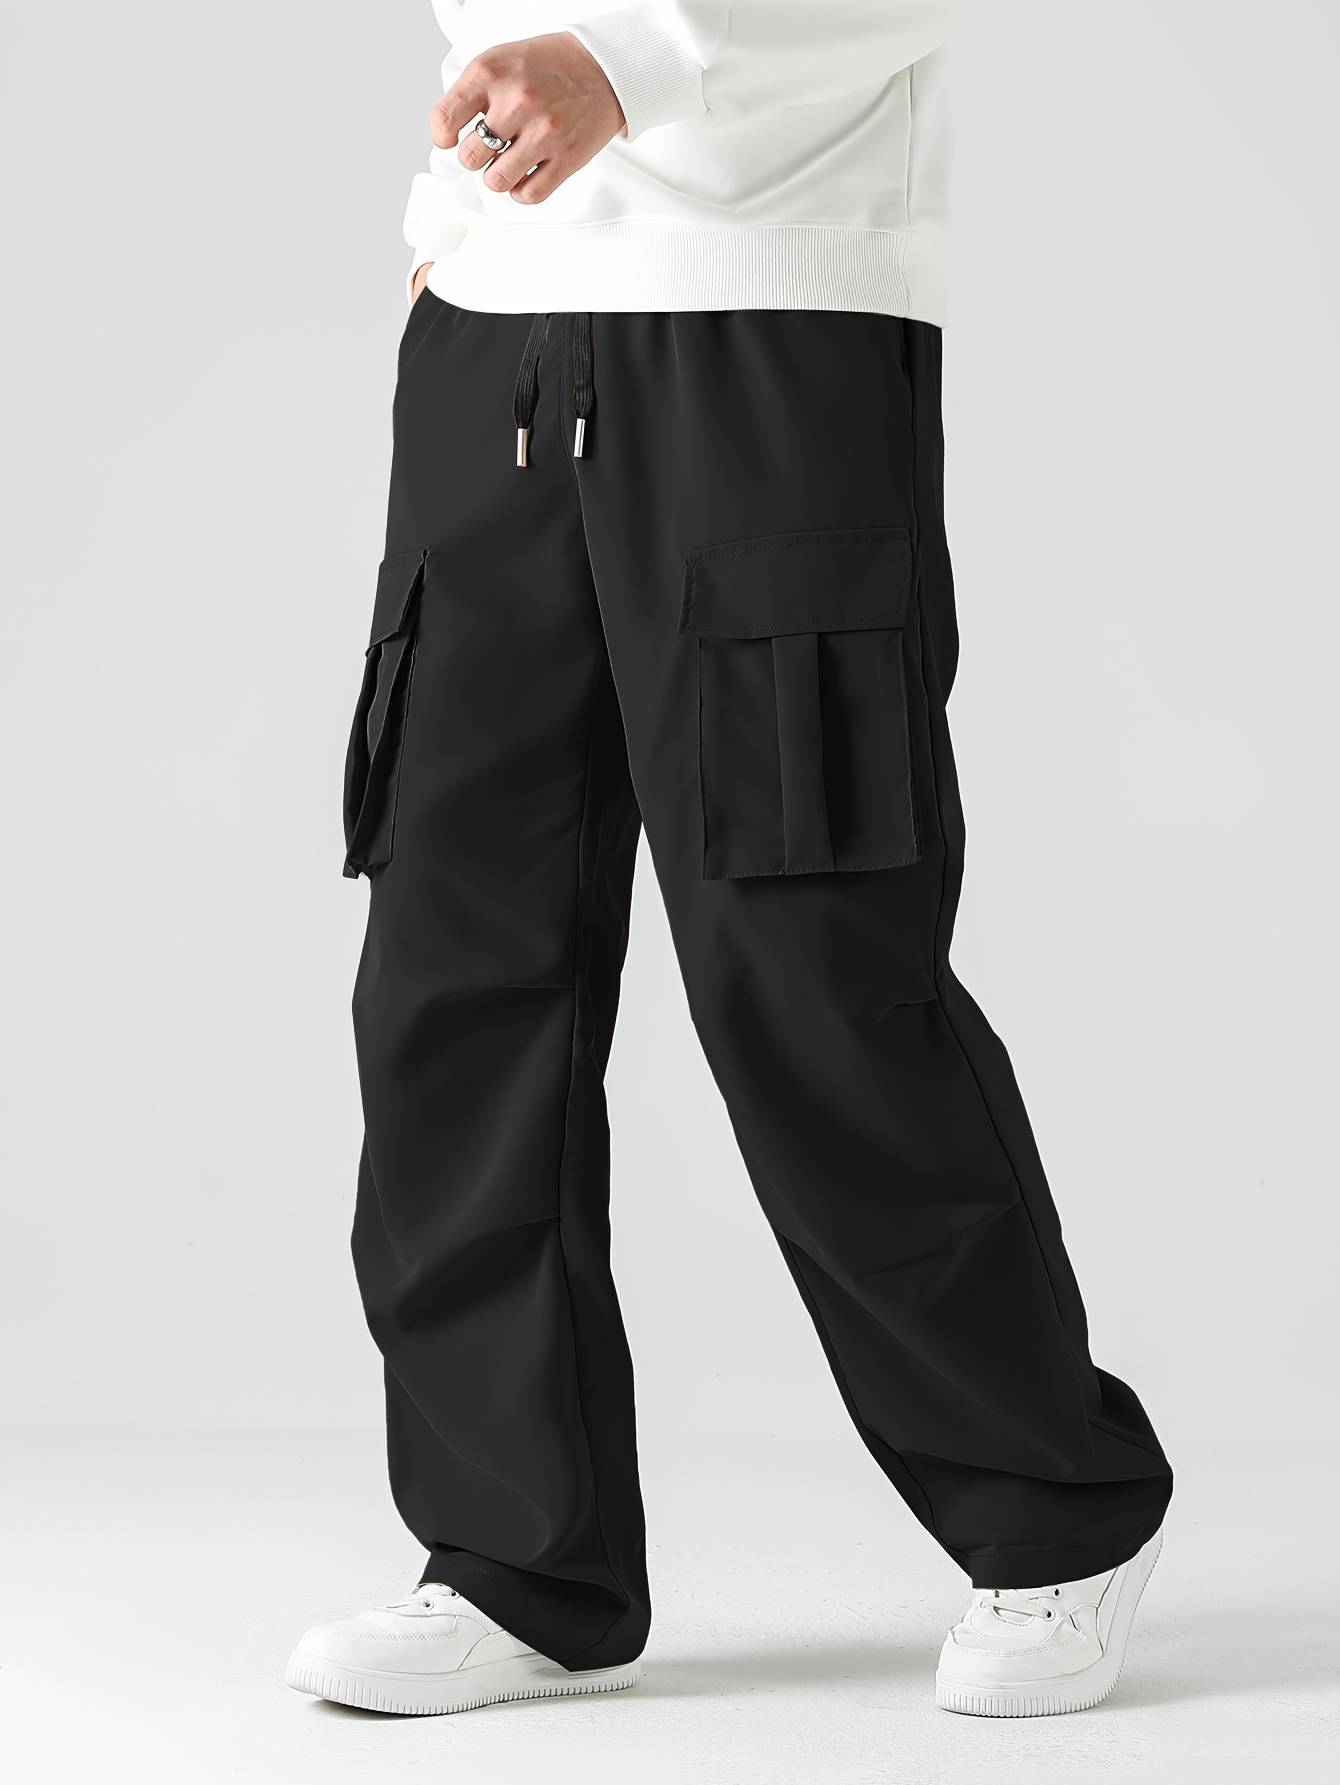  SPE969 Pantalones de chándal para hombres de color sólido de  algodón pantalones de jogging con cordón multi-bolsillo Slim al aire libre  pantalones de carga, Moderno / Equipada, M, Gris oscuro 